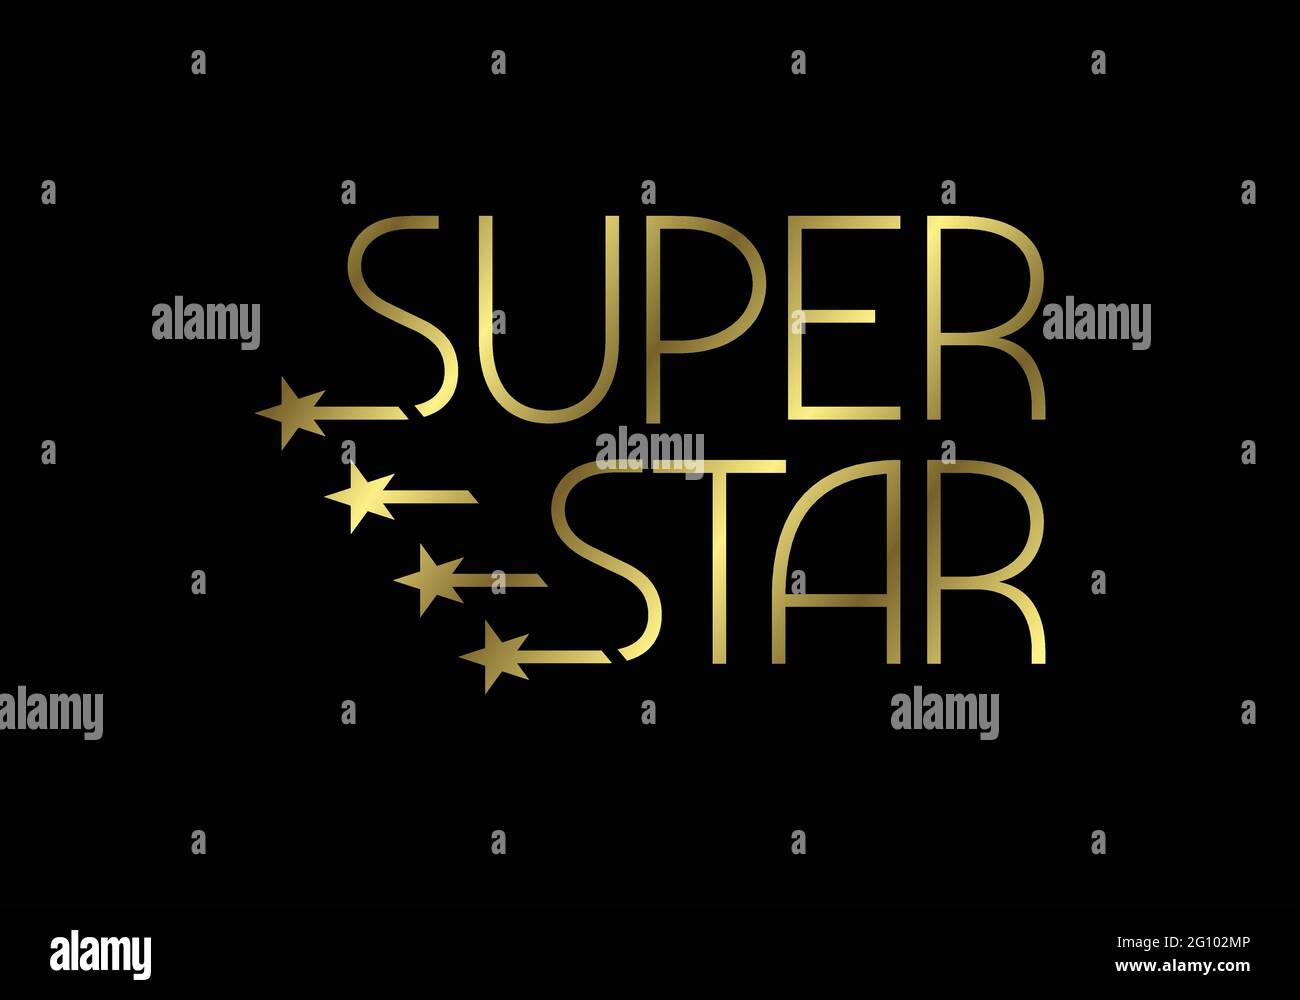 Symbol Für Das Goldene Super Star-Logo. Stock Vektor